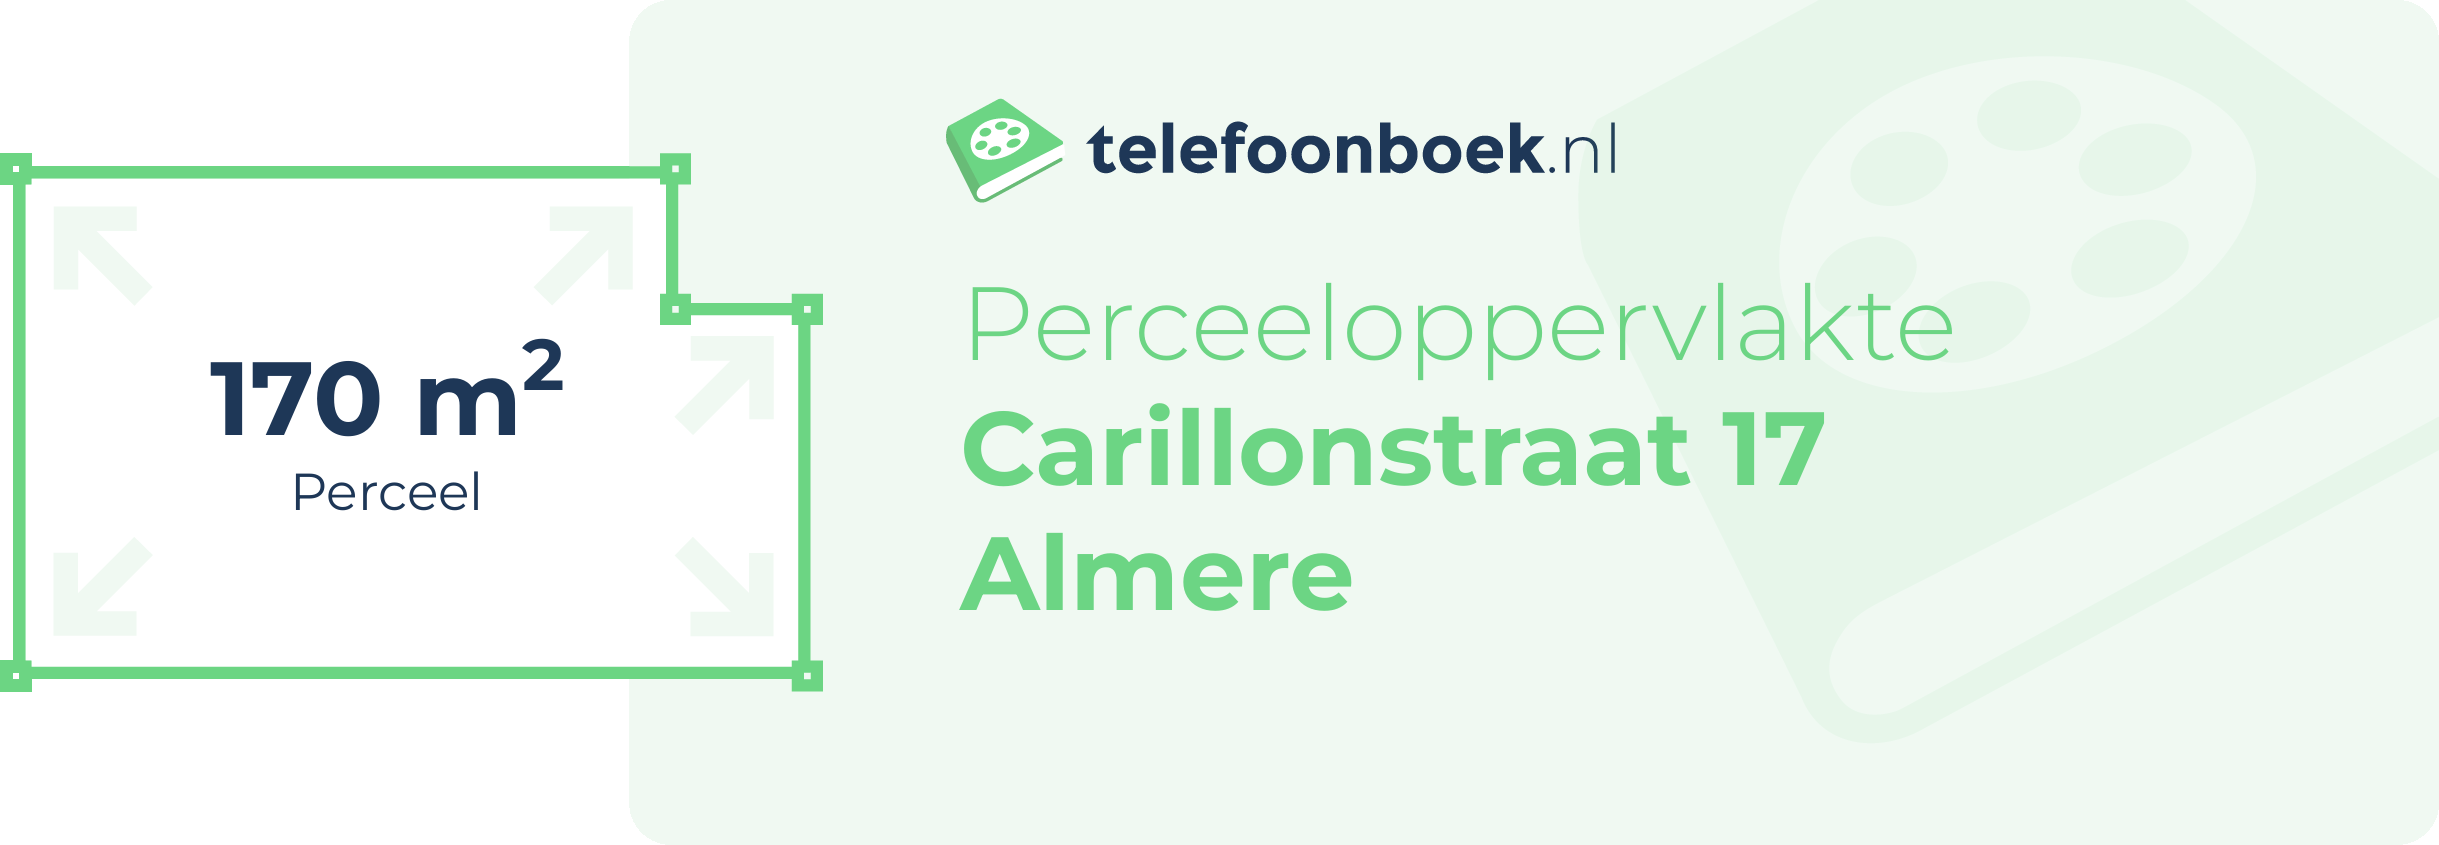 Perceeloppervlakte Carillonstraat 17 Almere